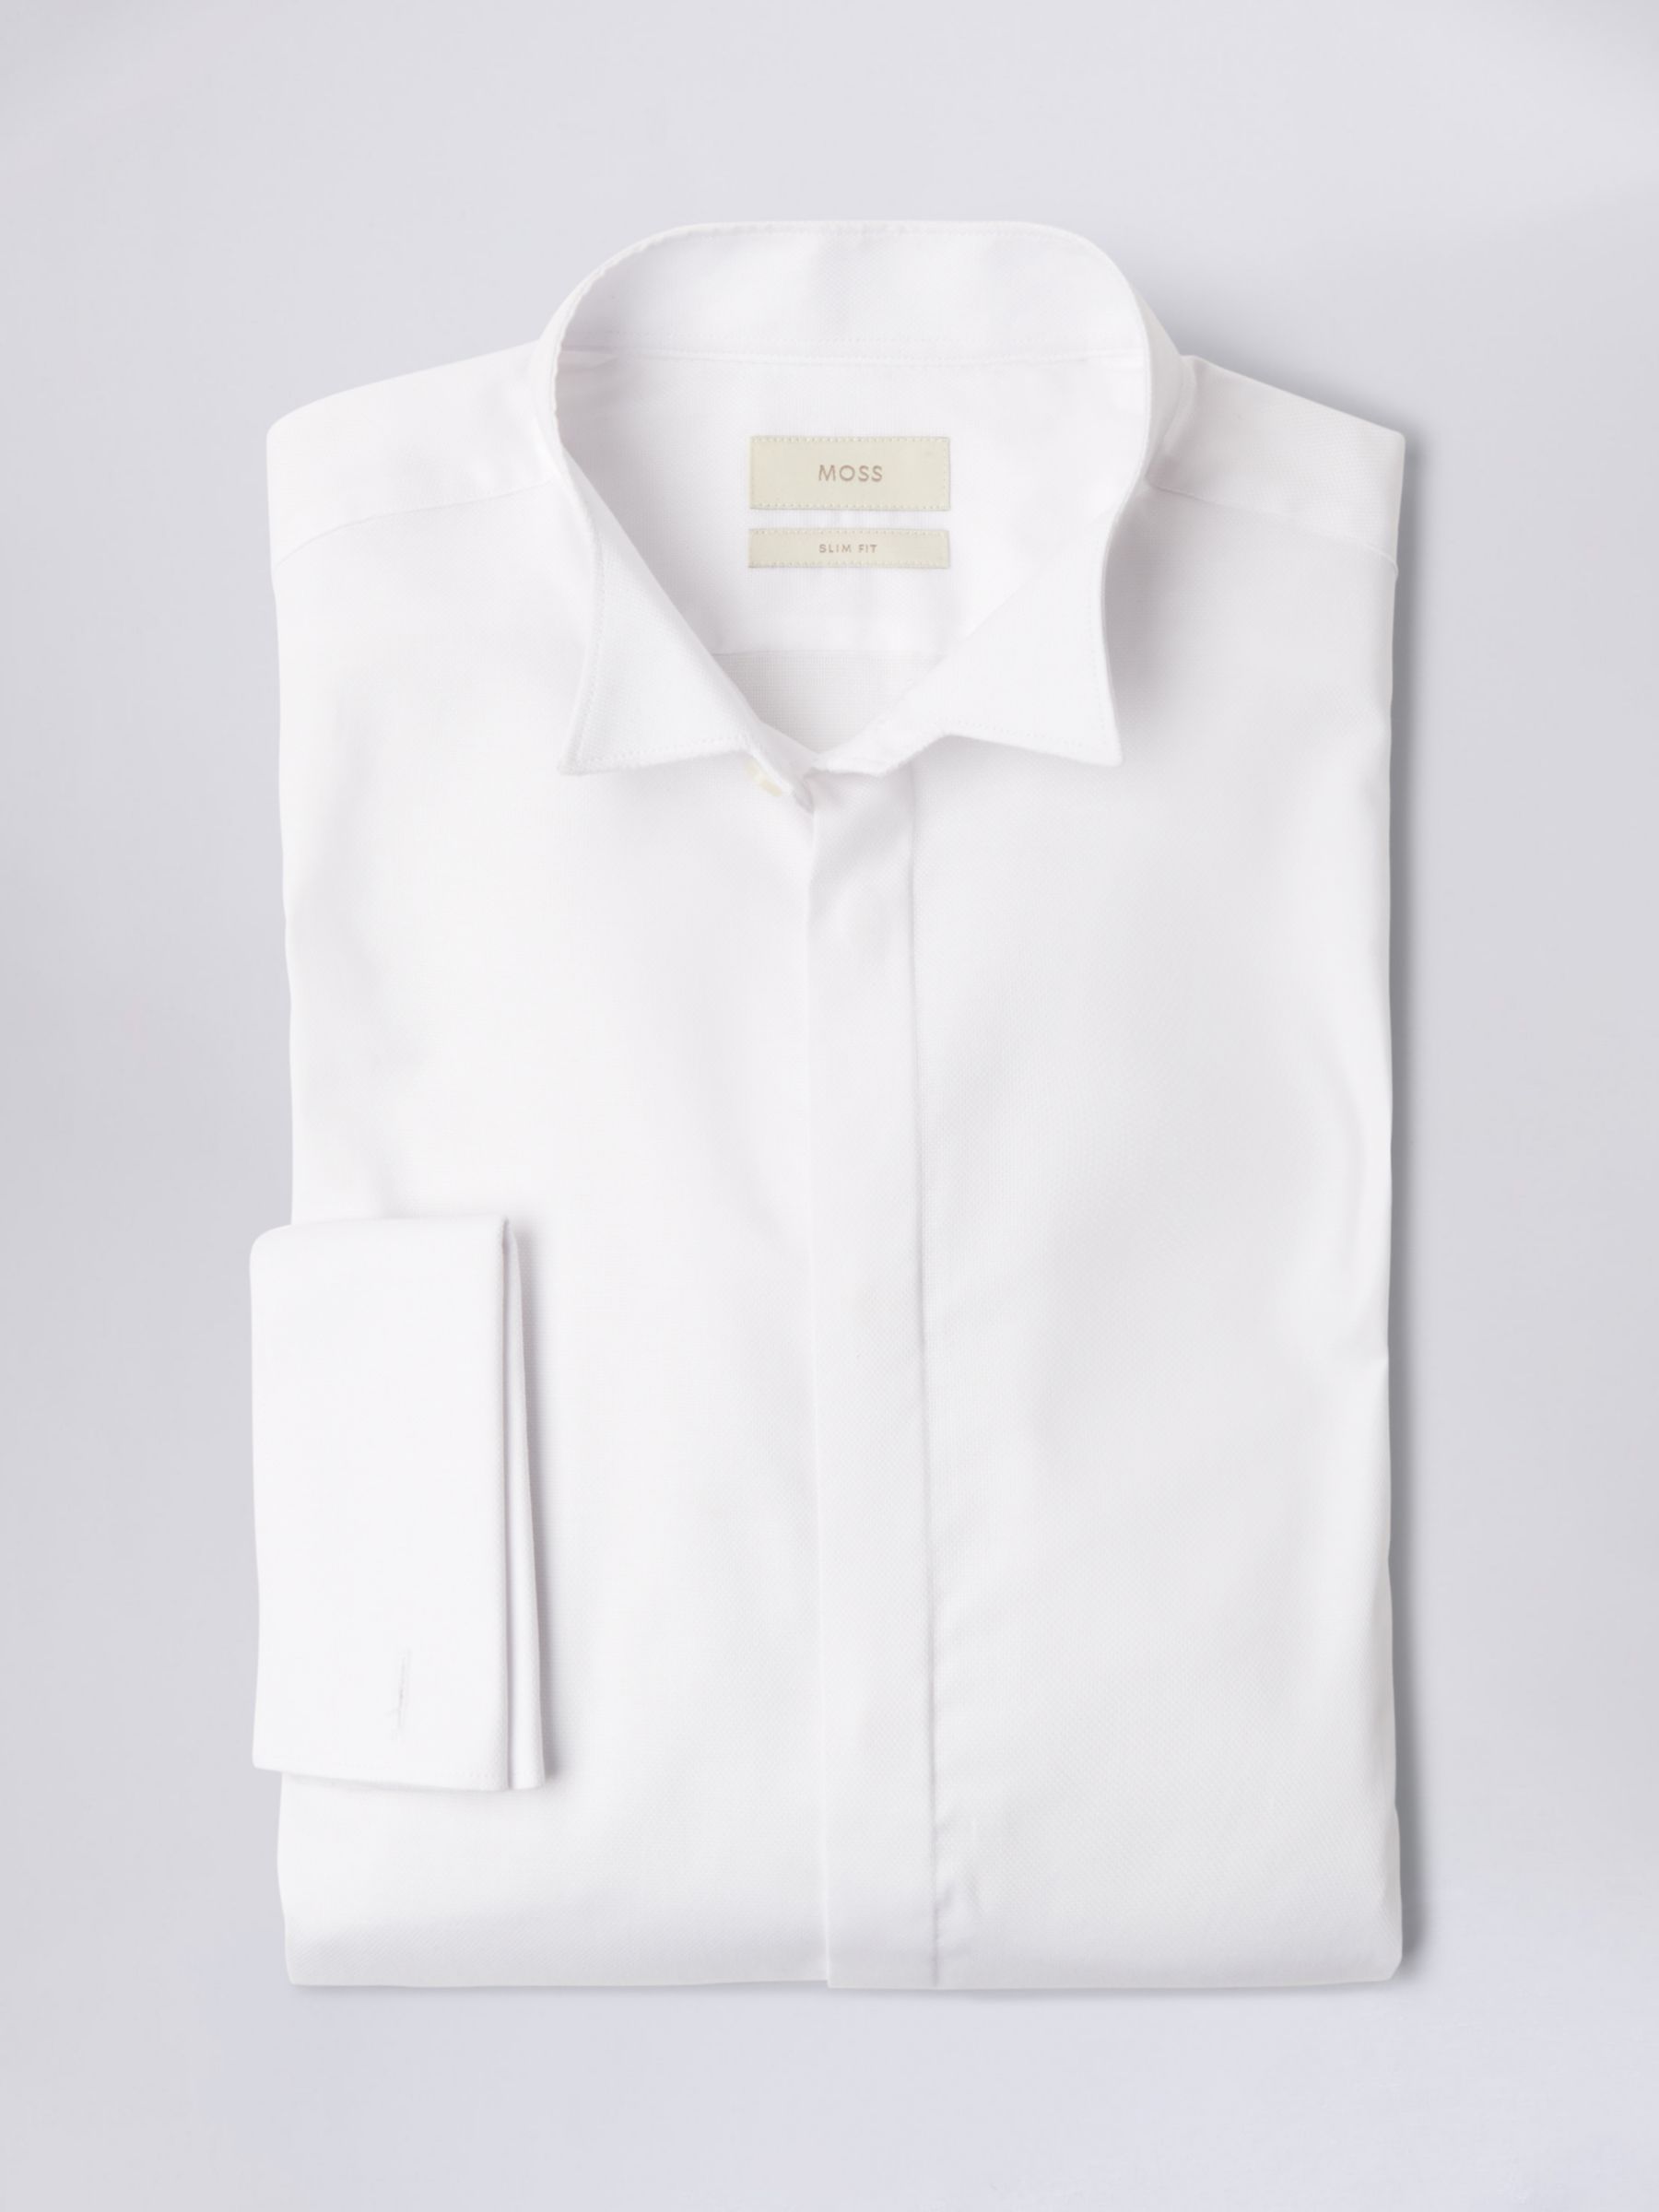 Moss Slim Fit Wing Collar Dress Shirt, White, 14